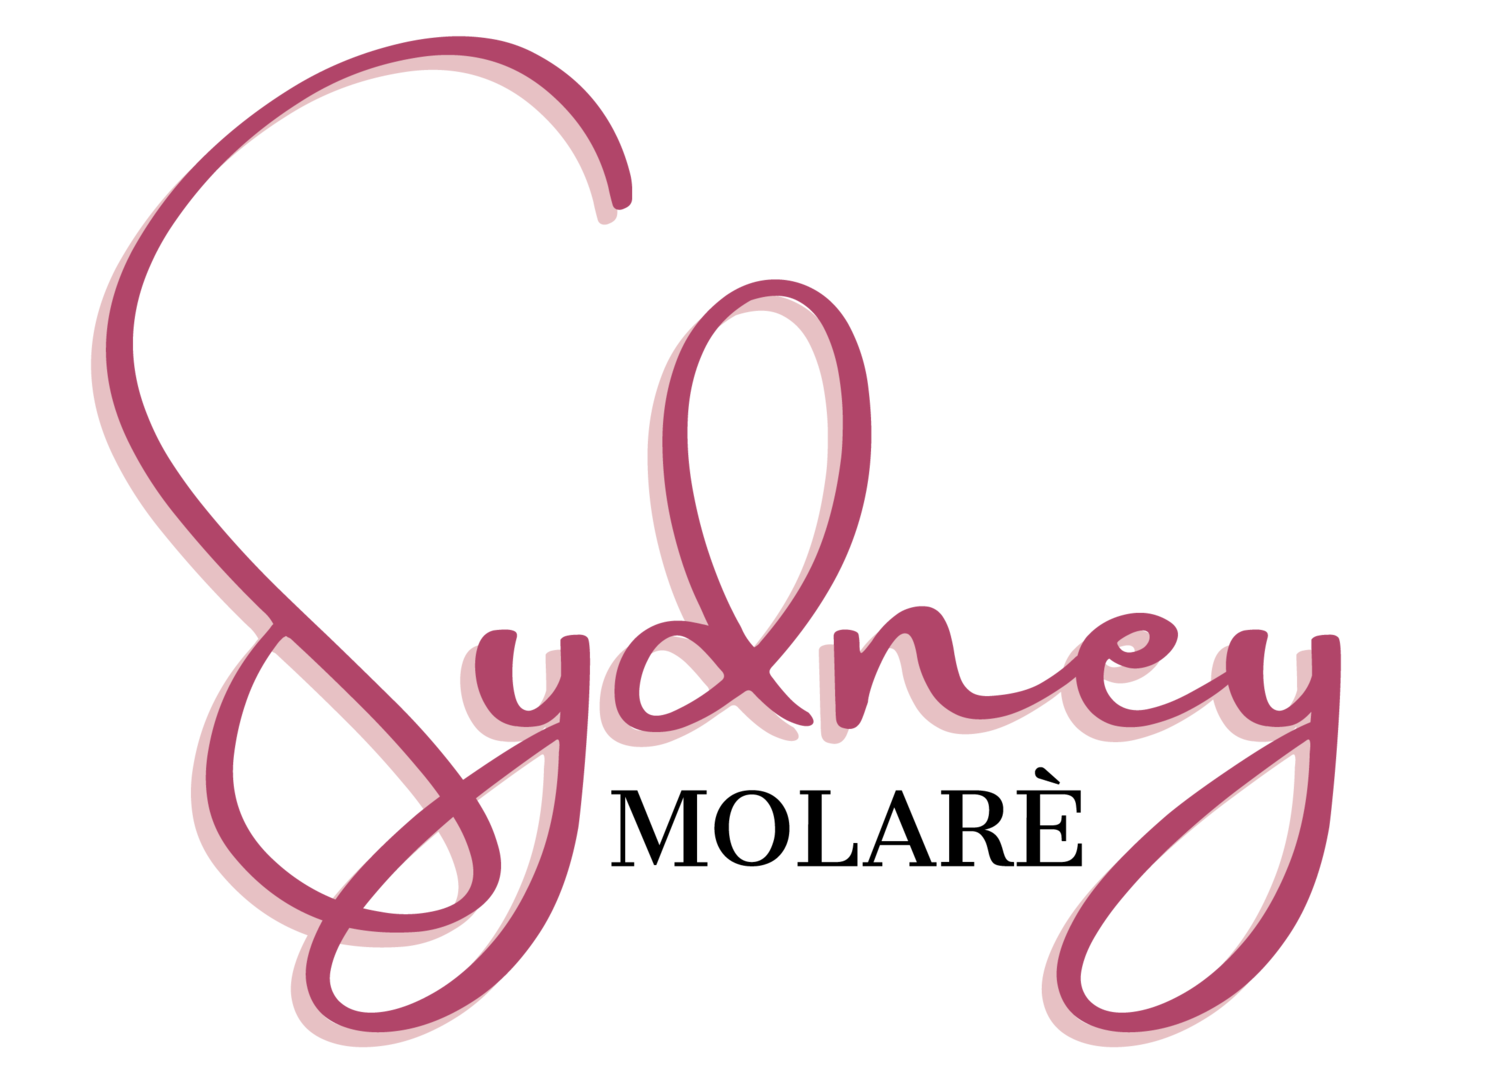 Sydney Molare